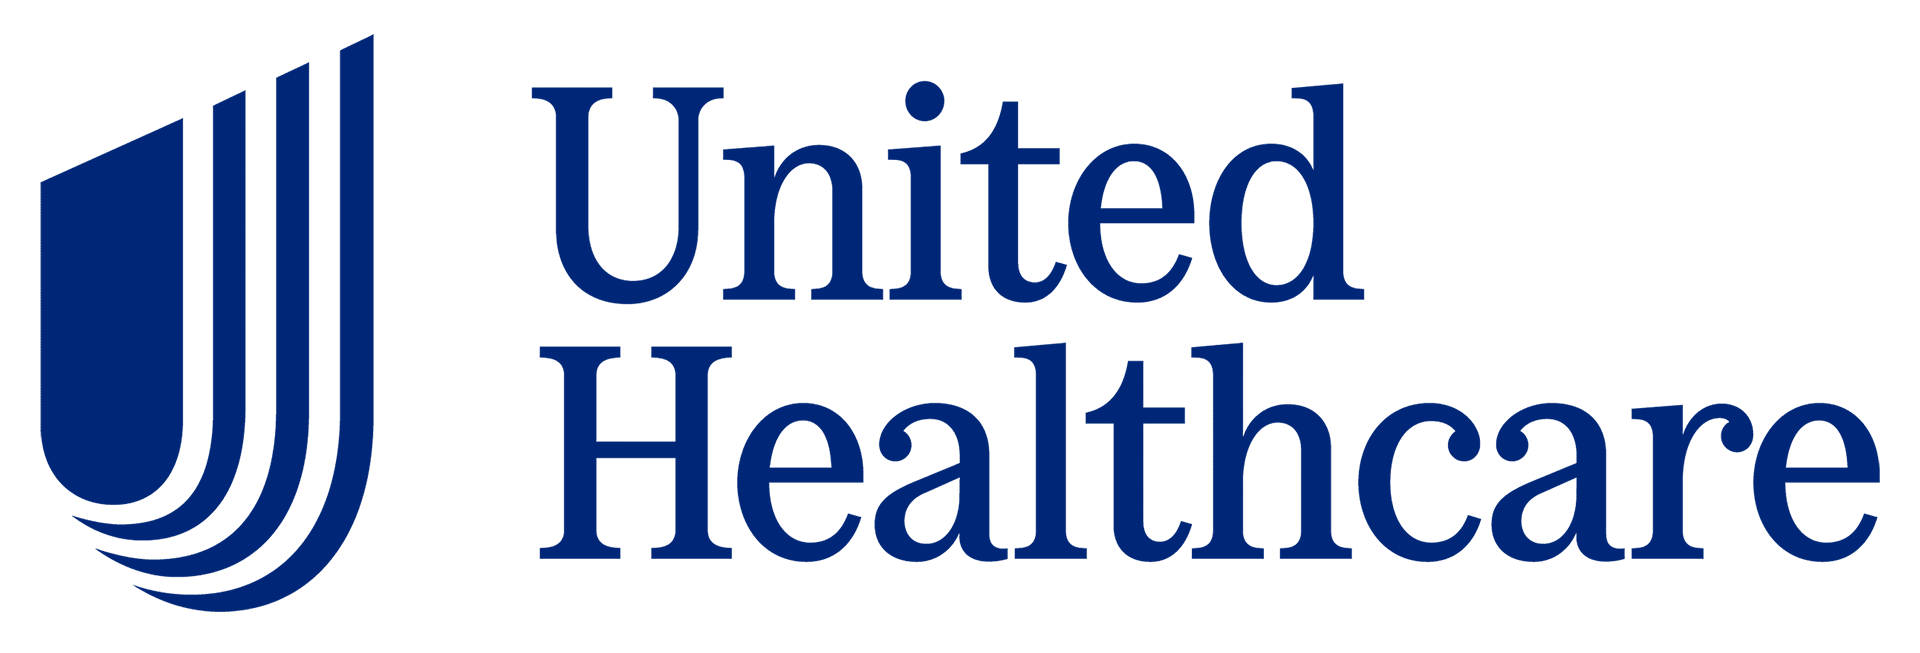 A united health logo is shown.